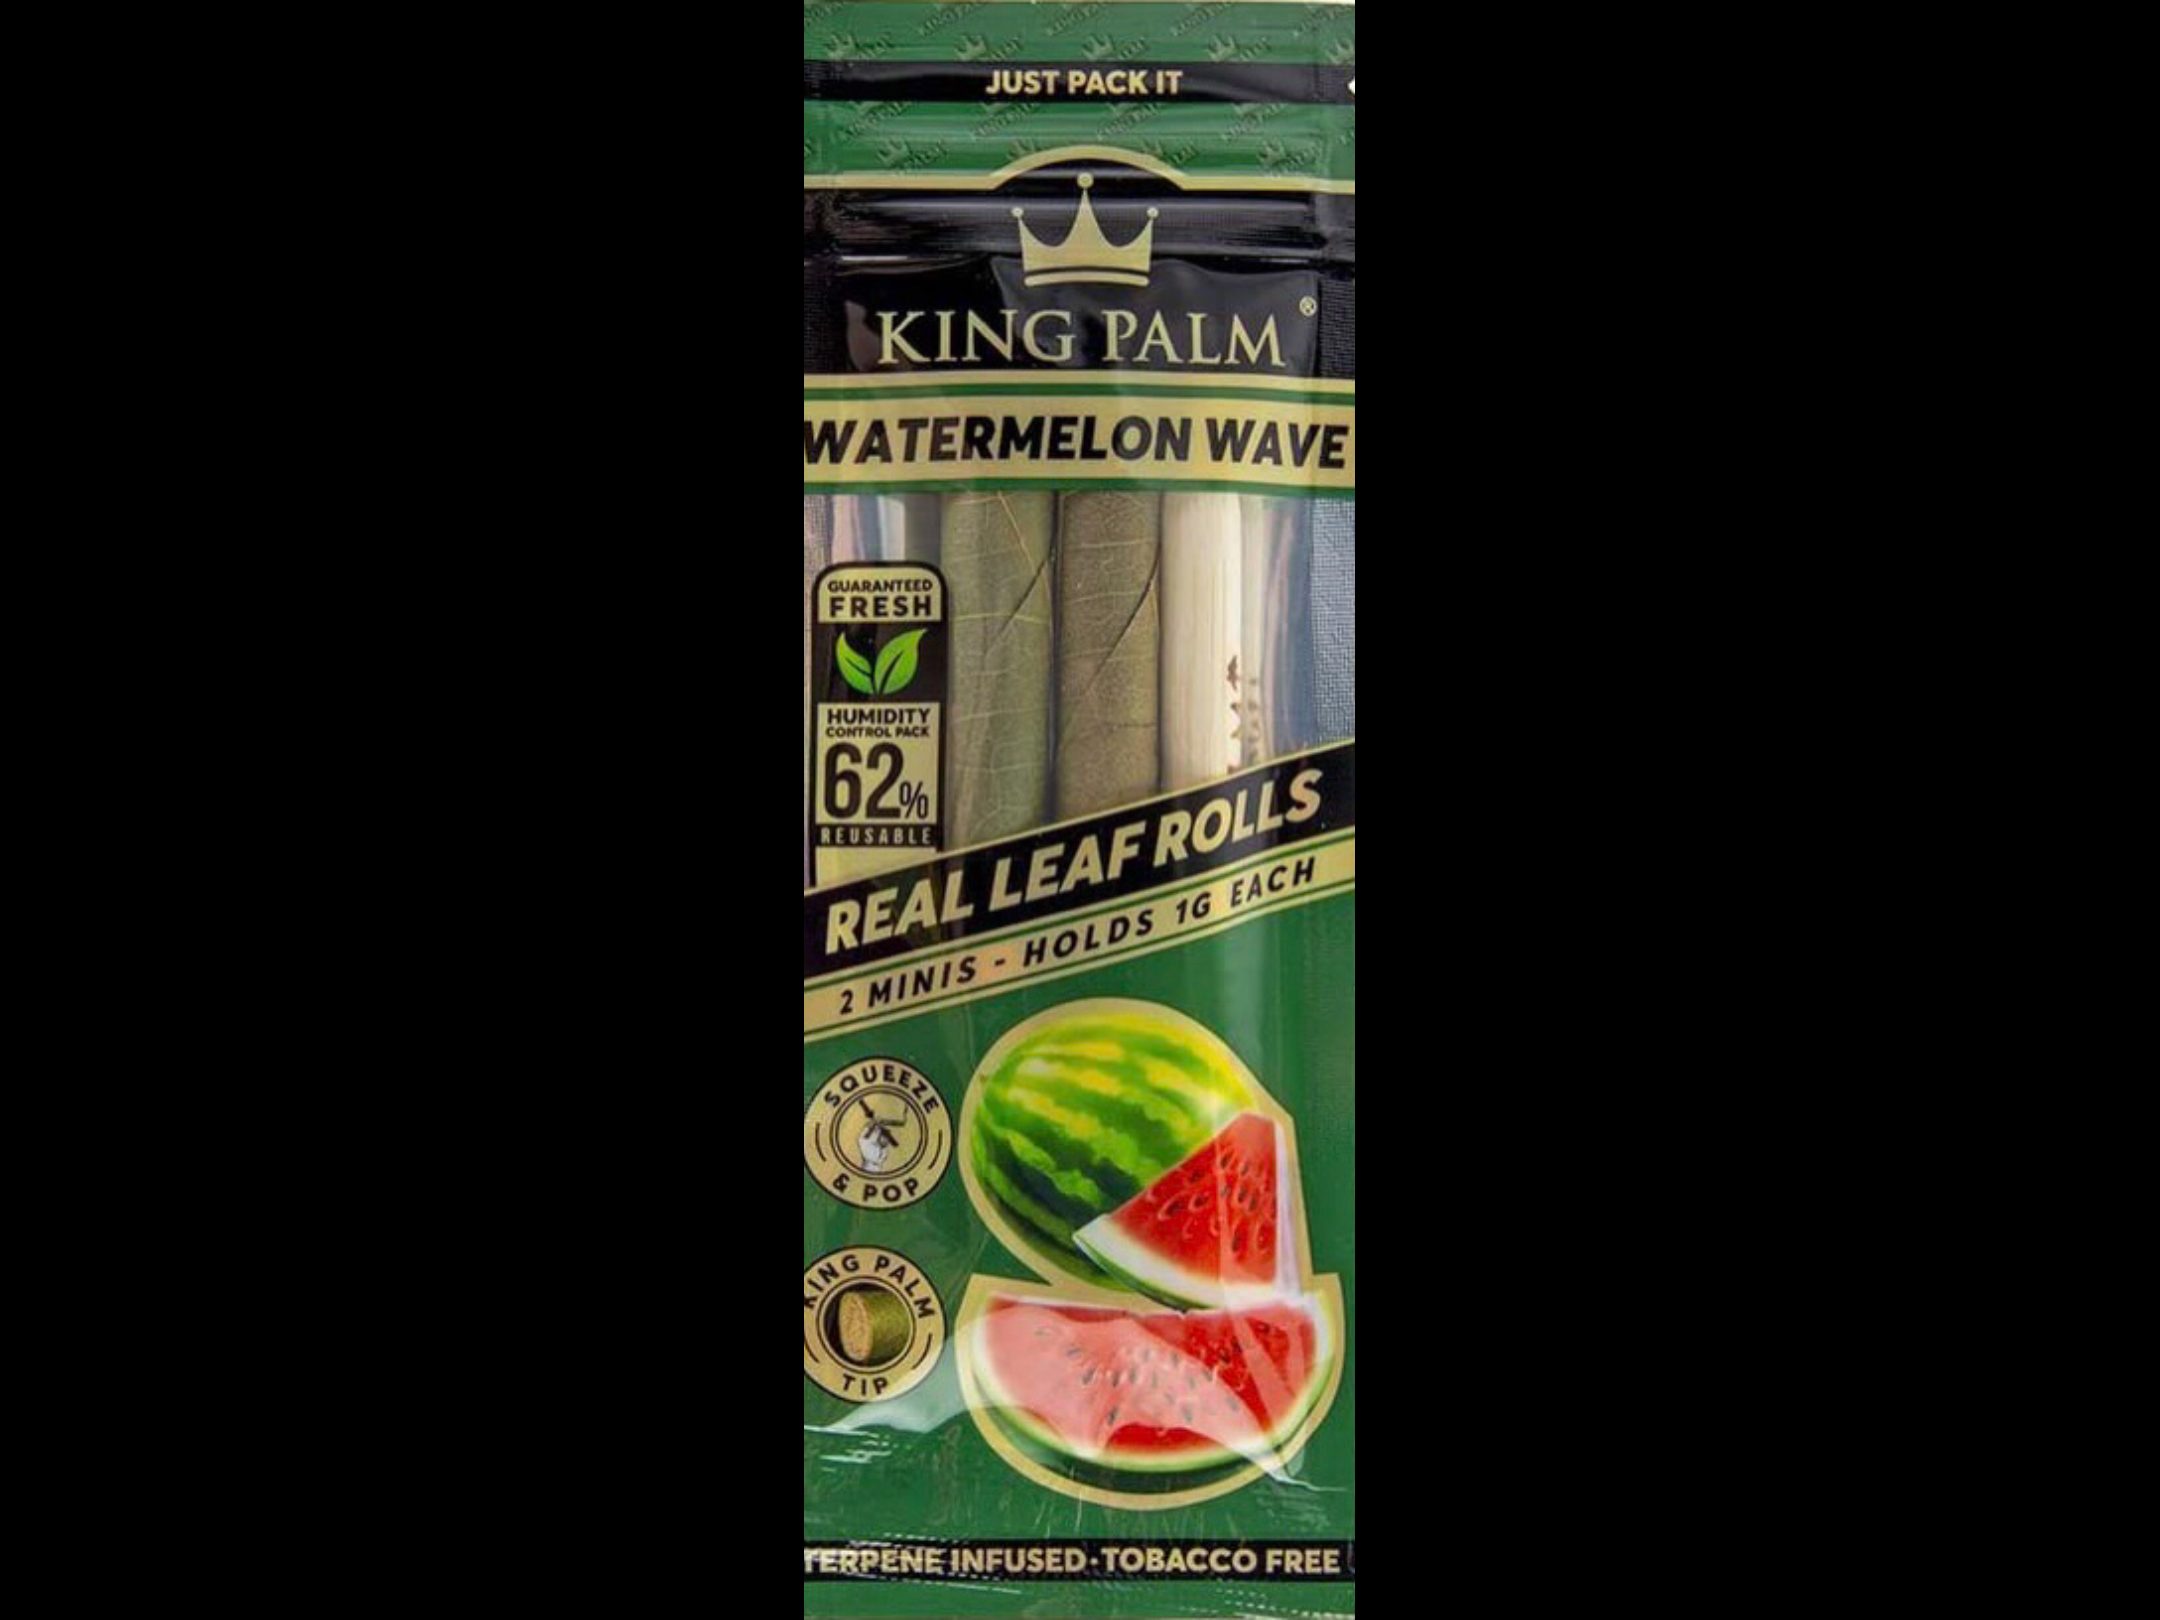 KING PALM Real Leaf Rolls